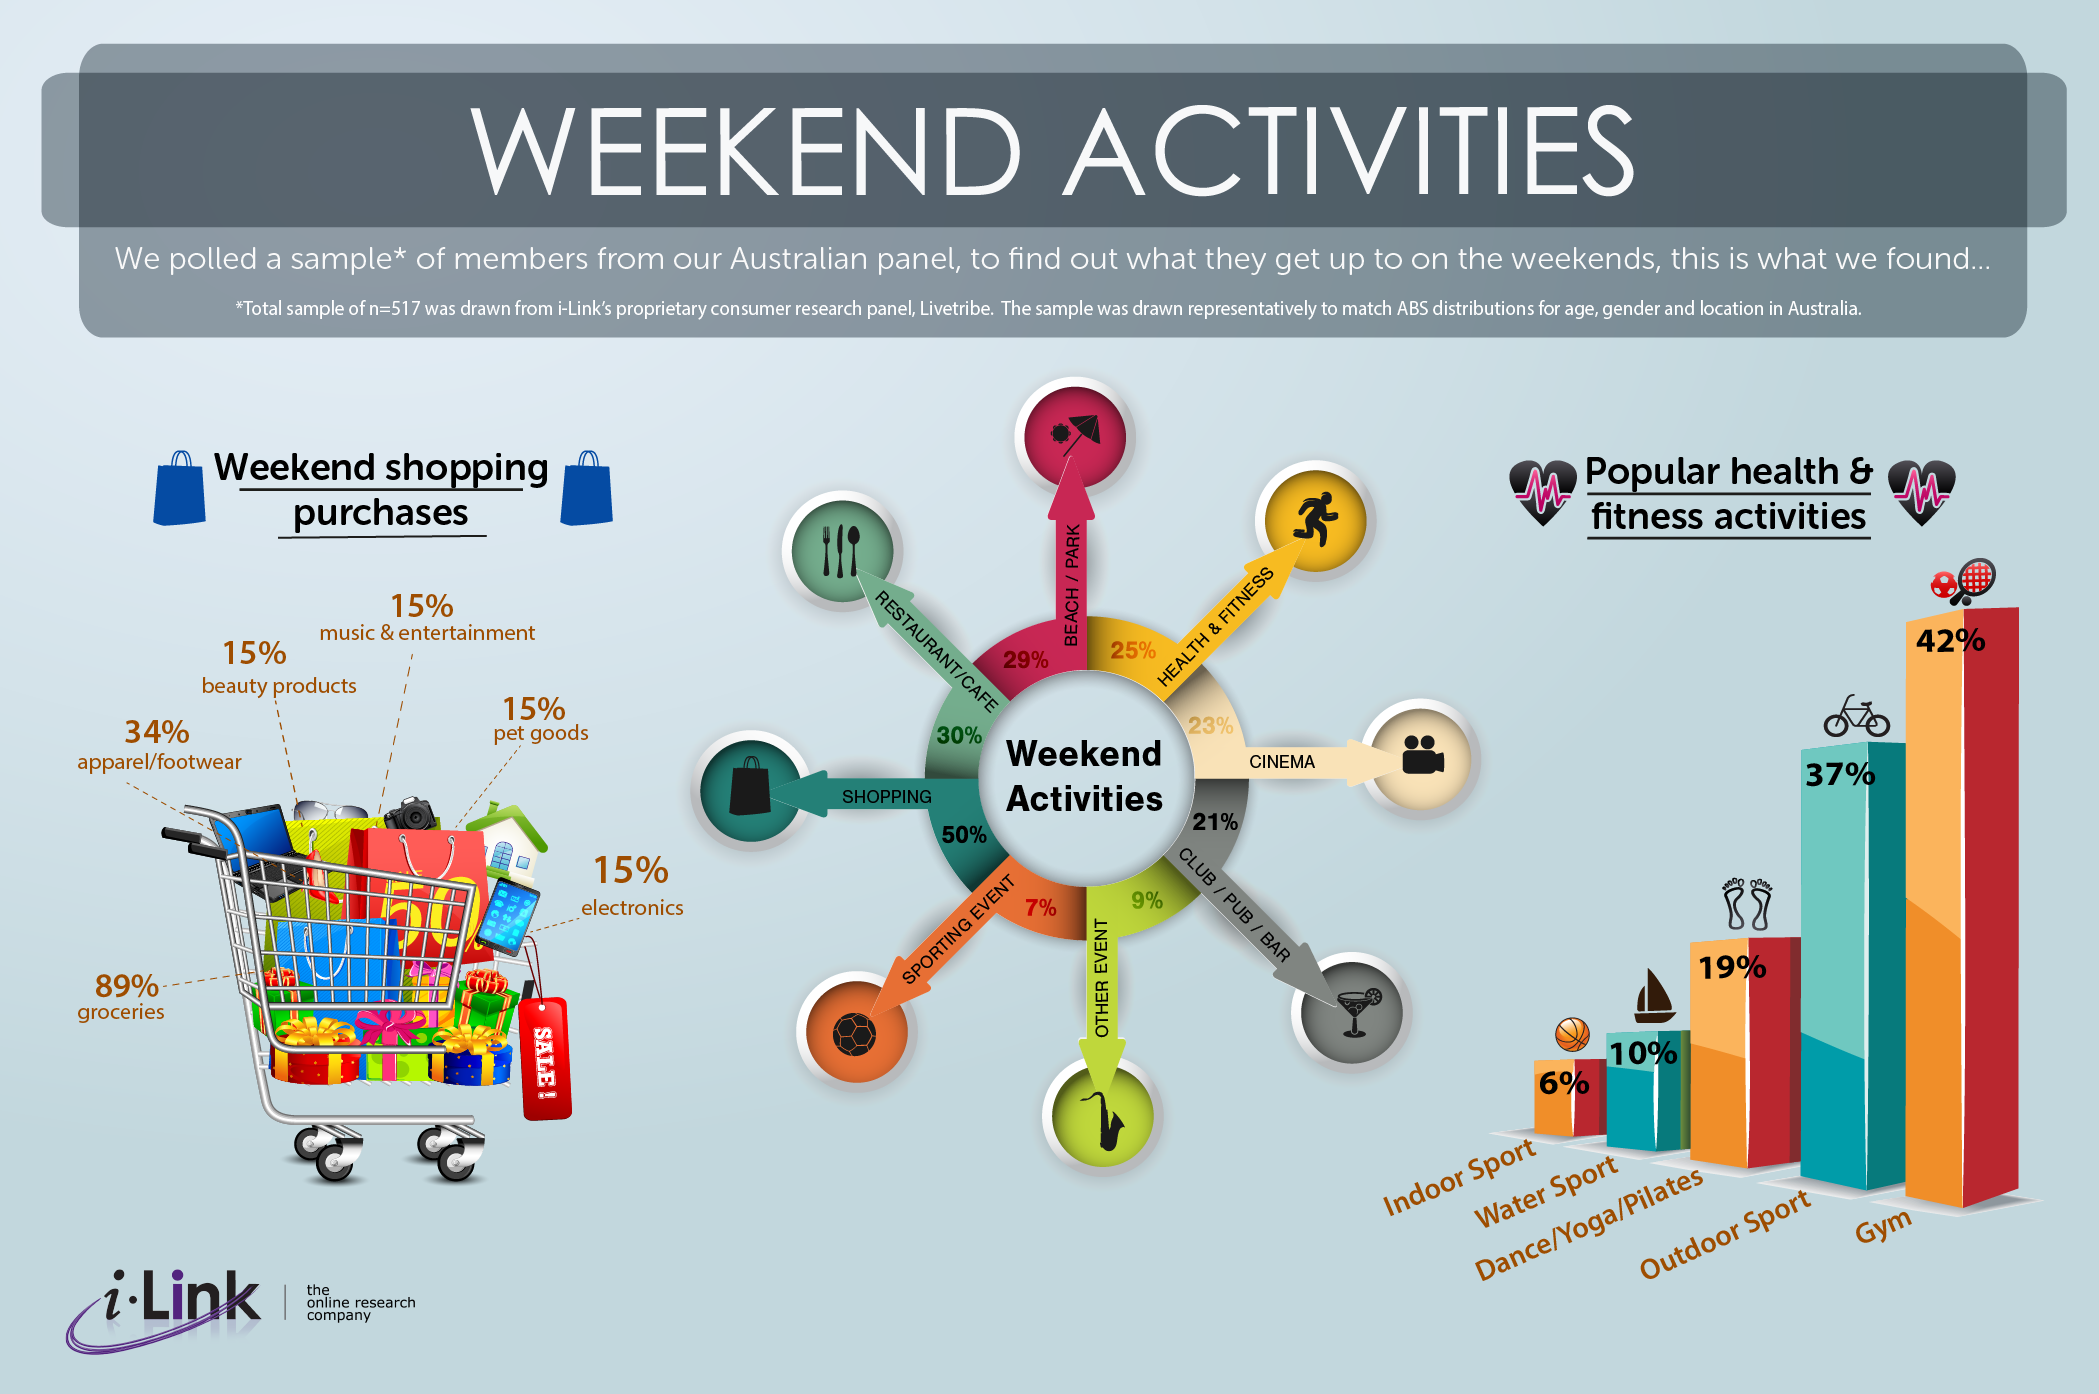 Weekend vocabulary. Weekend activities. Plans for the weekend. Active weekend.